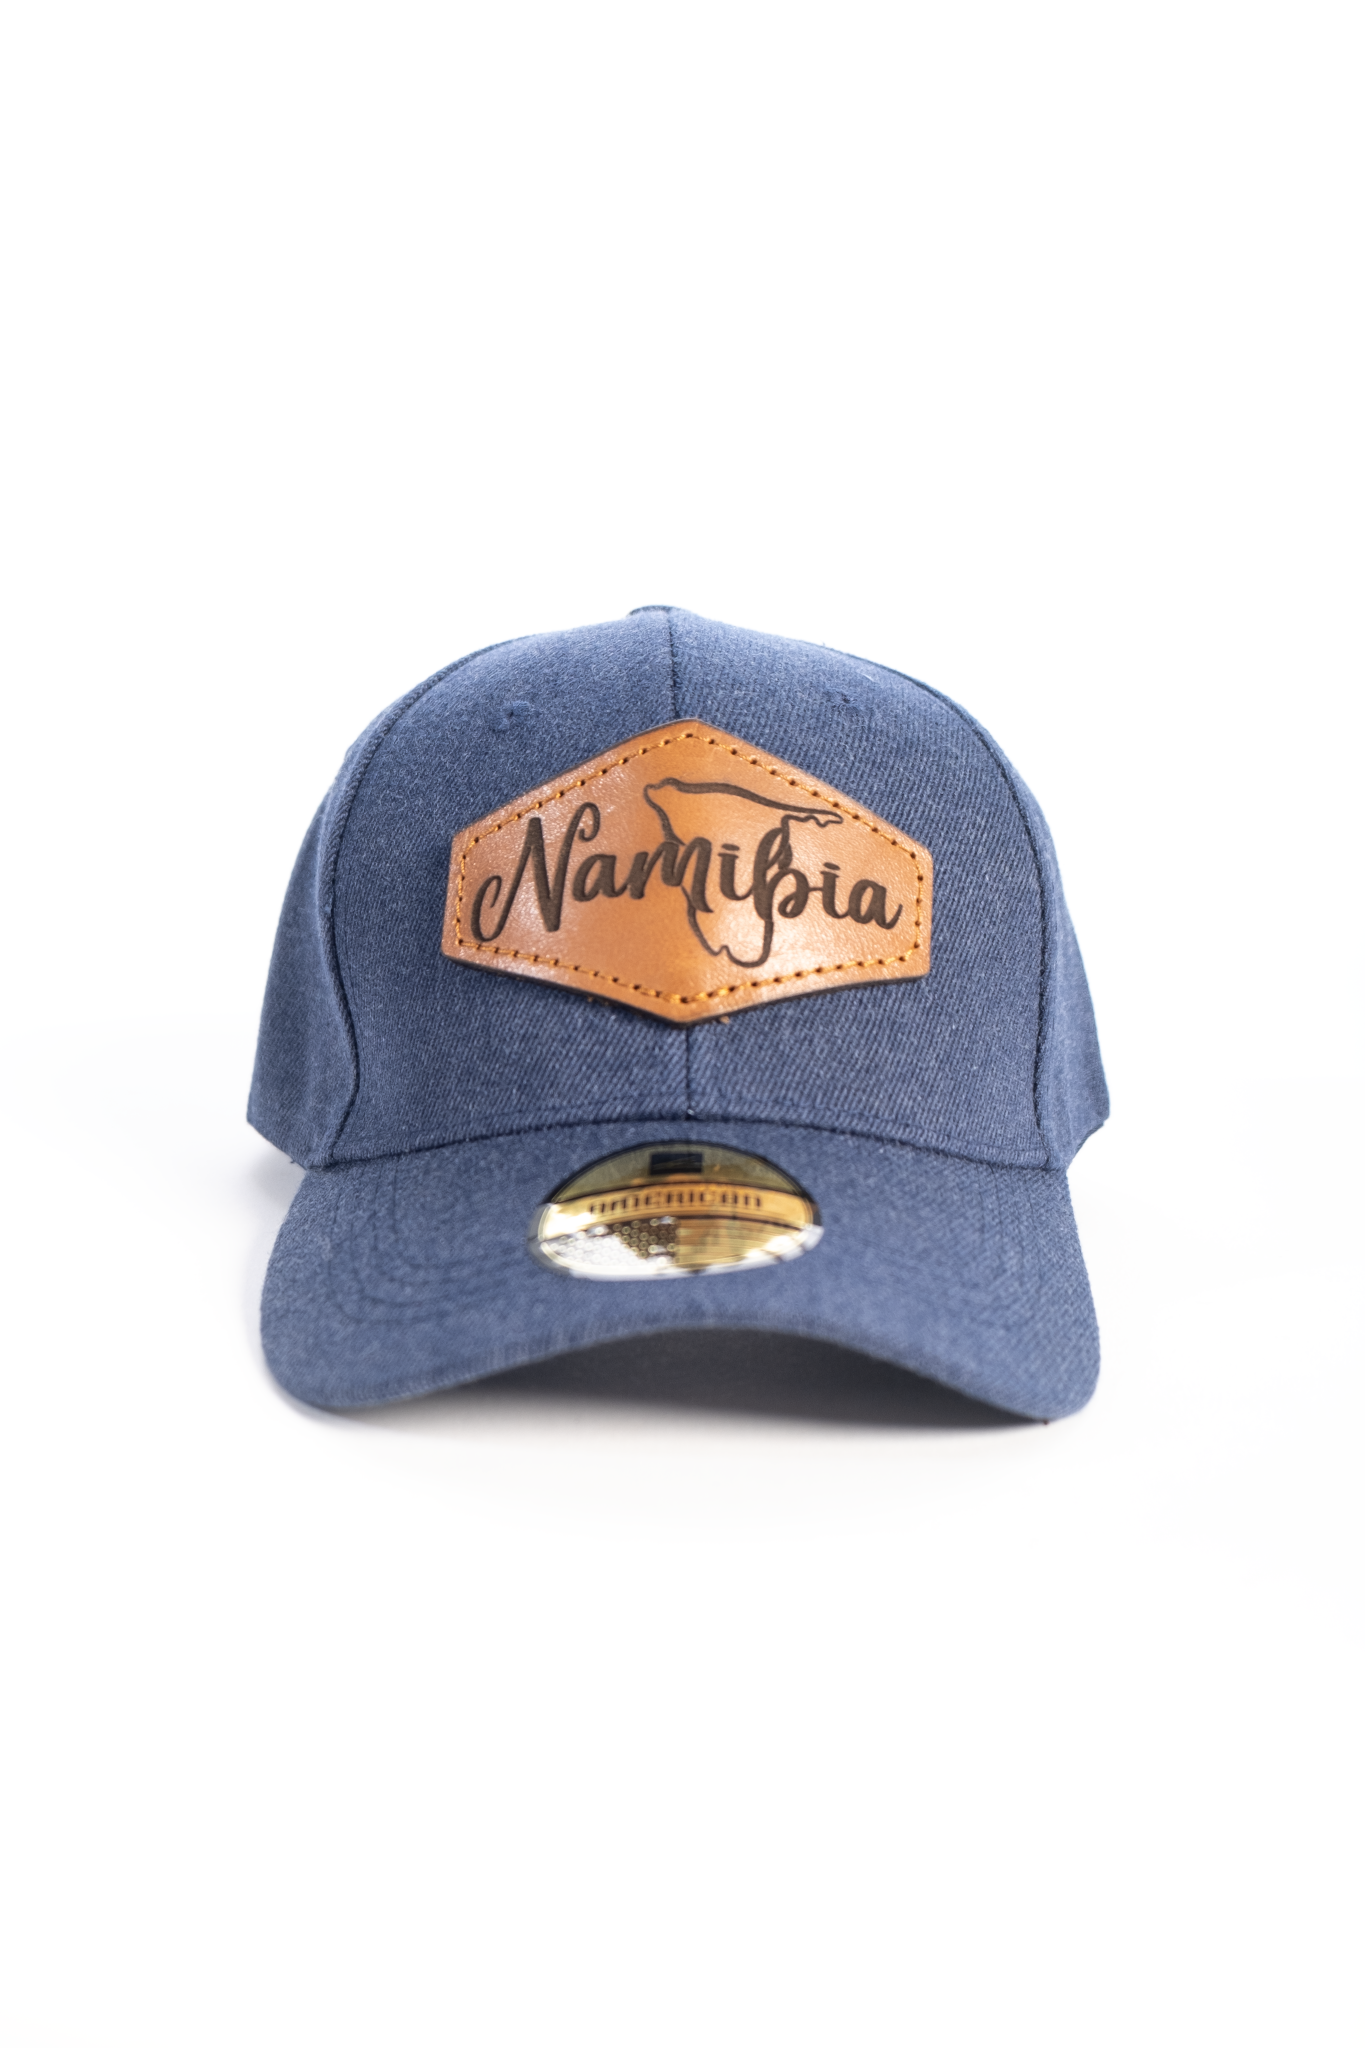 Namibia Leather & Denim style Cap